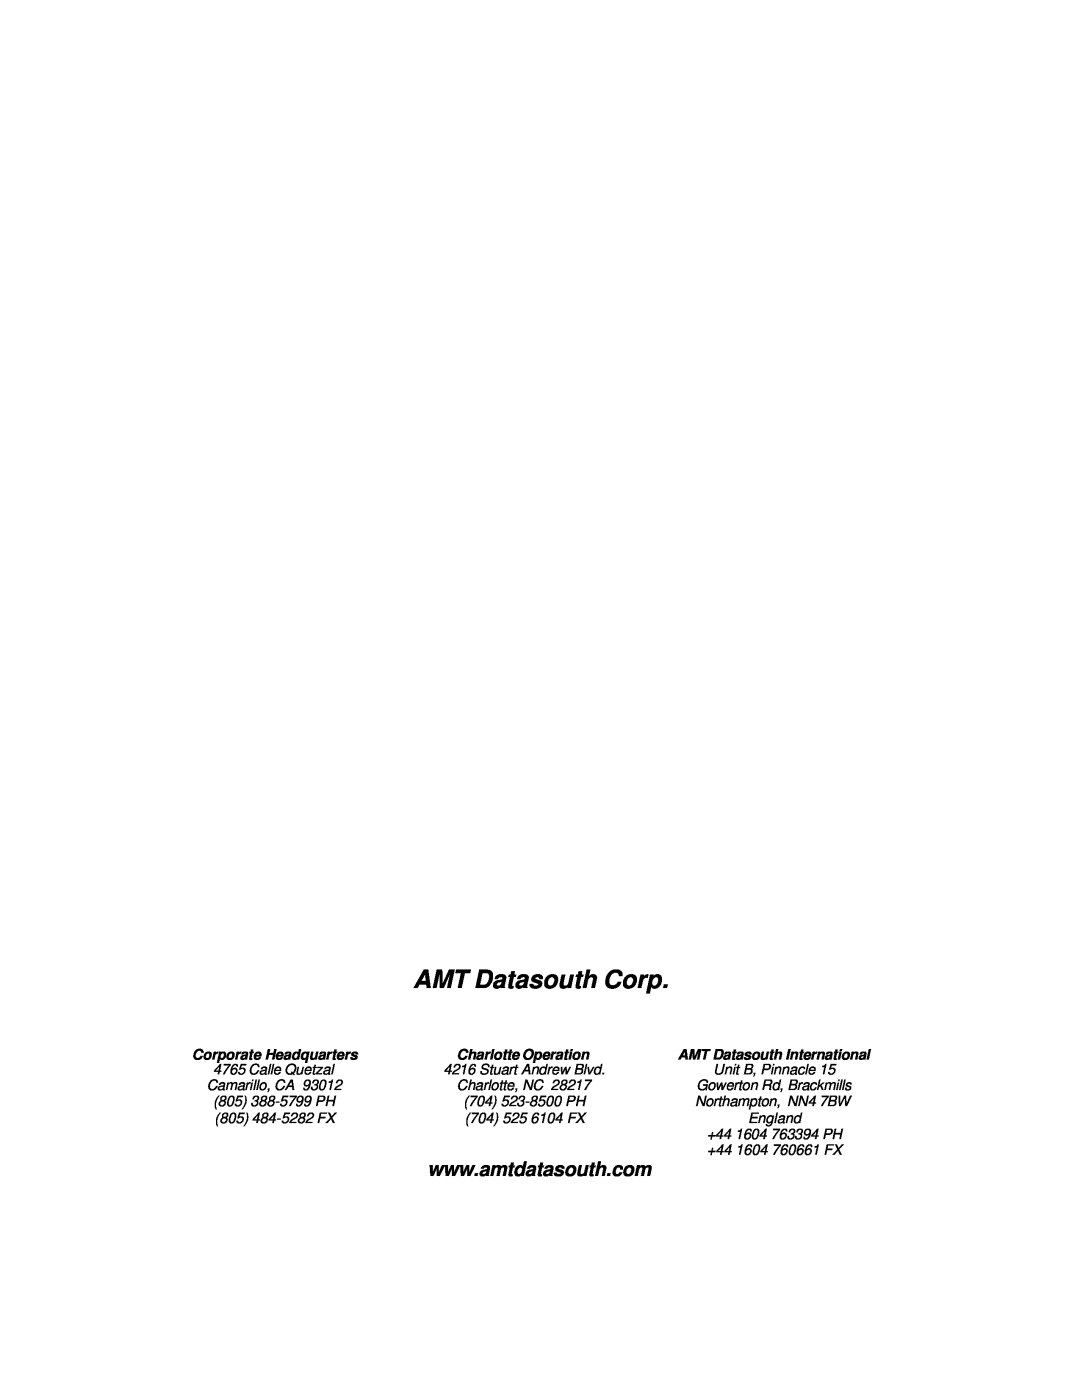 AMT Datasouth 600 manual AMT Datasouth Corp, Stuart Andrew Blvd, Camarillo, CA, Charlotte, NC, 704 525 6104 FX, England 